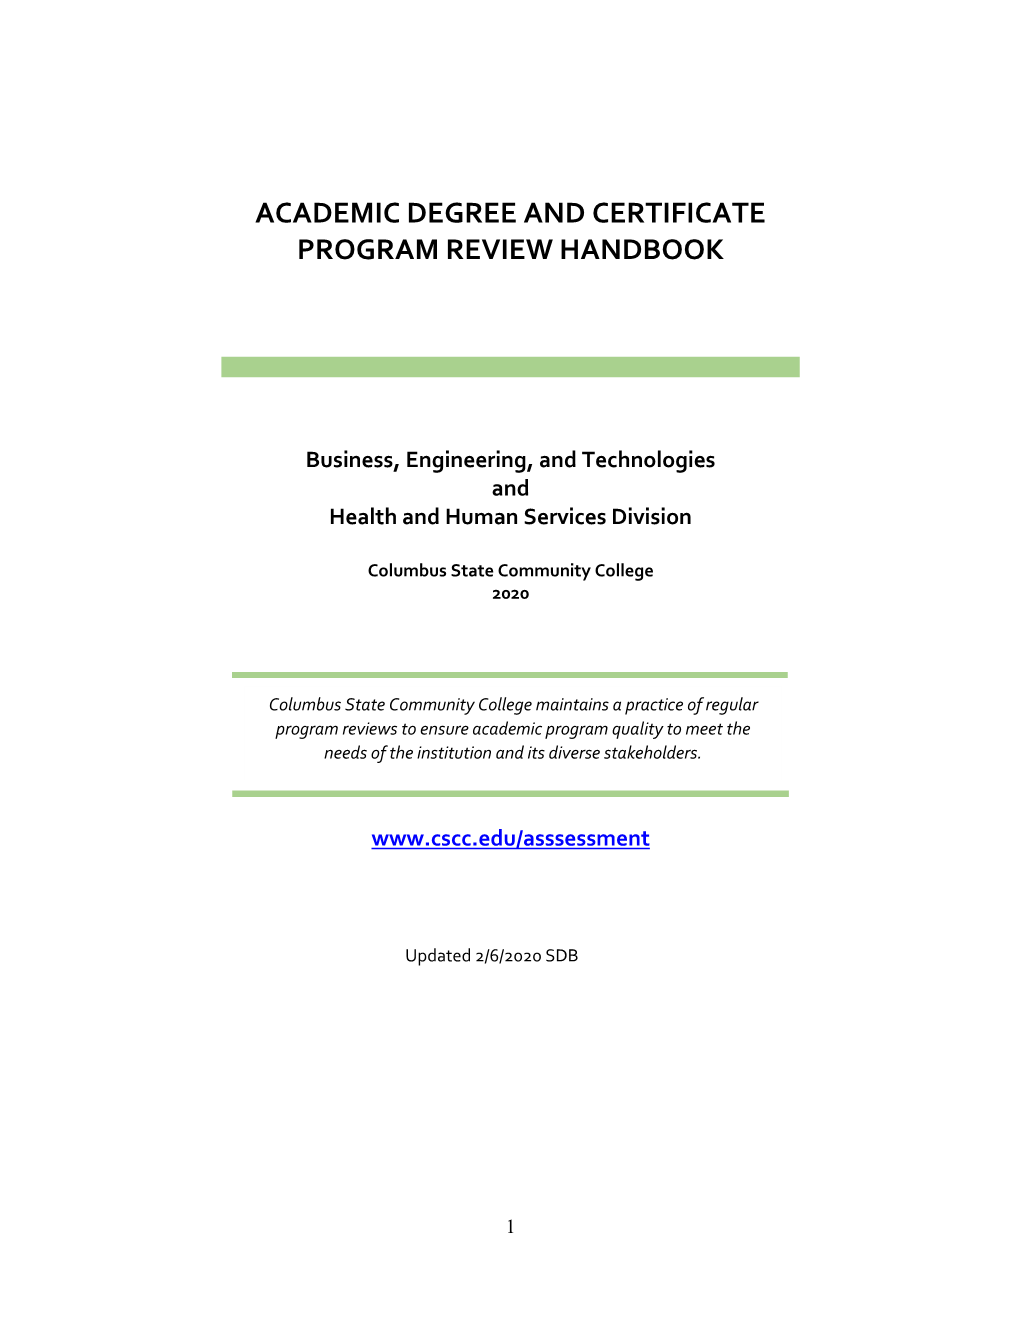 Academic Degree and Certificate Program Review Handbook